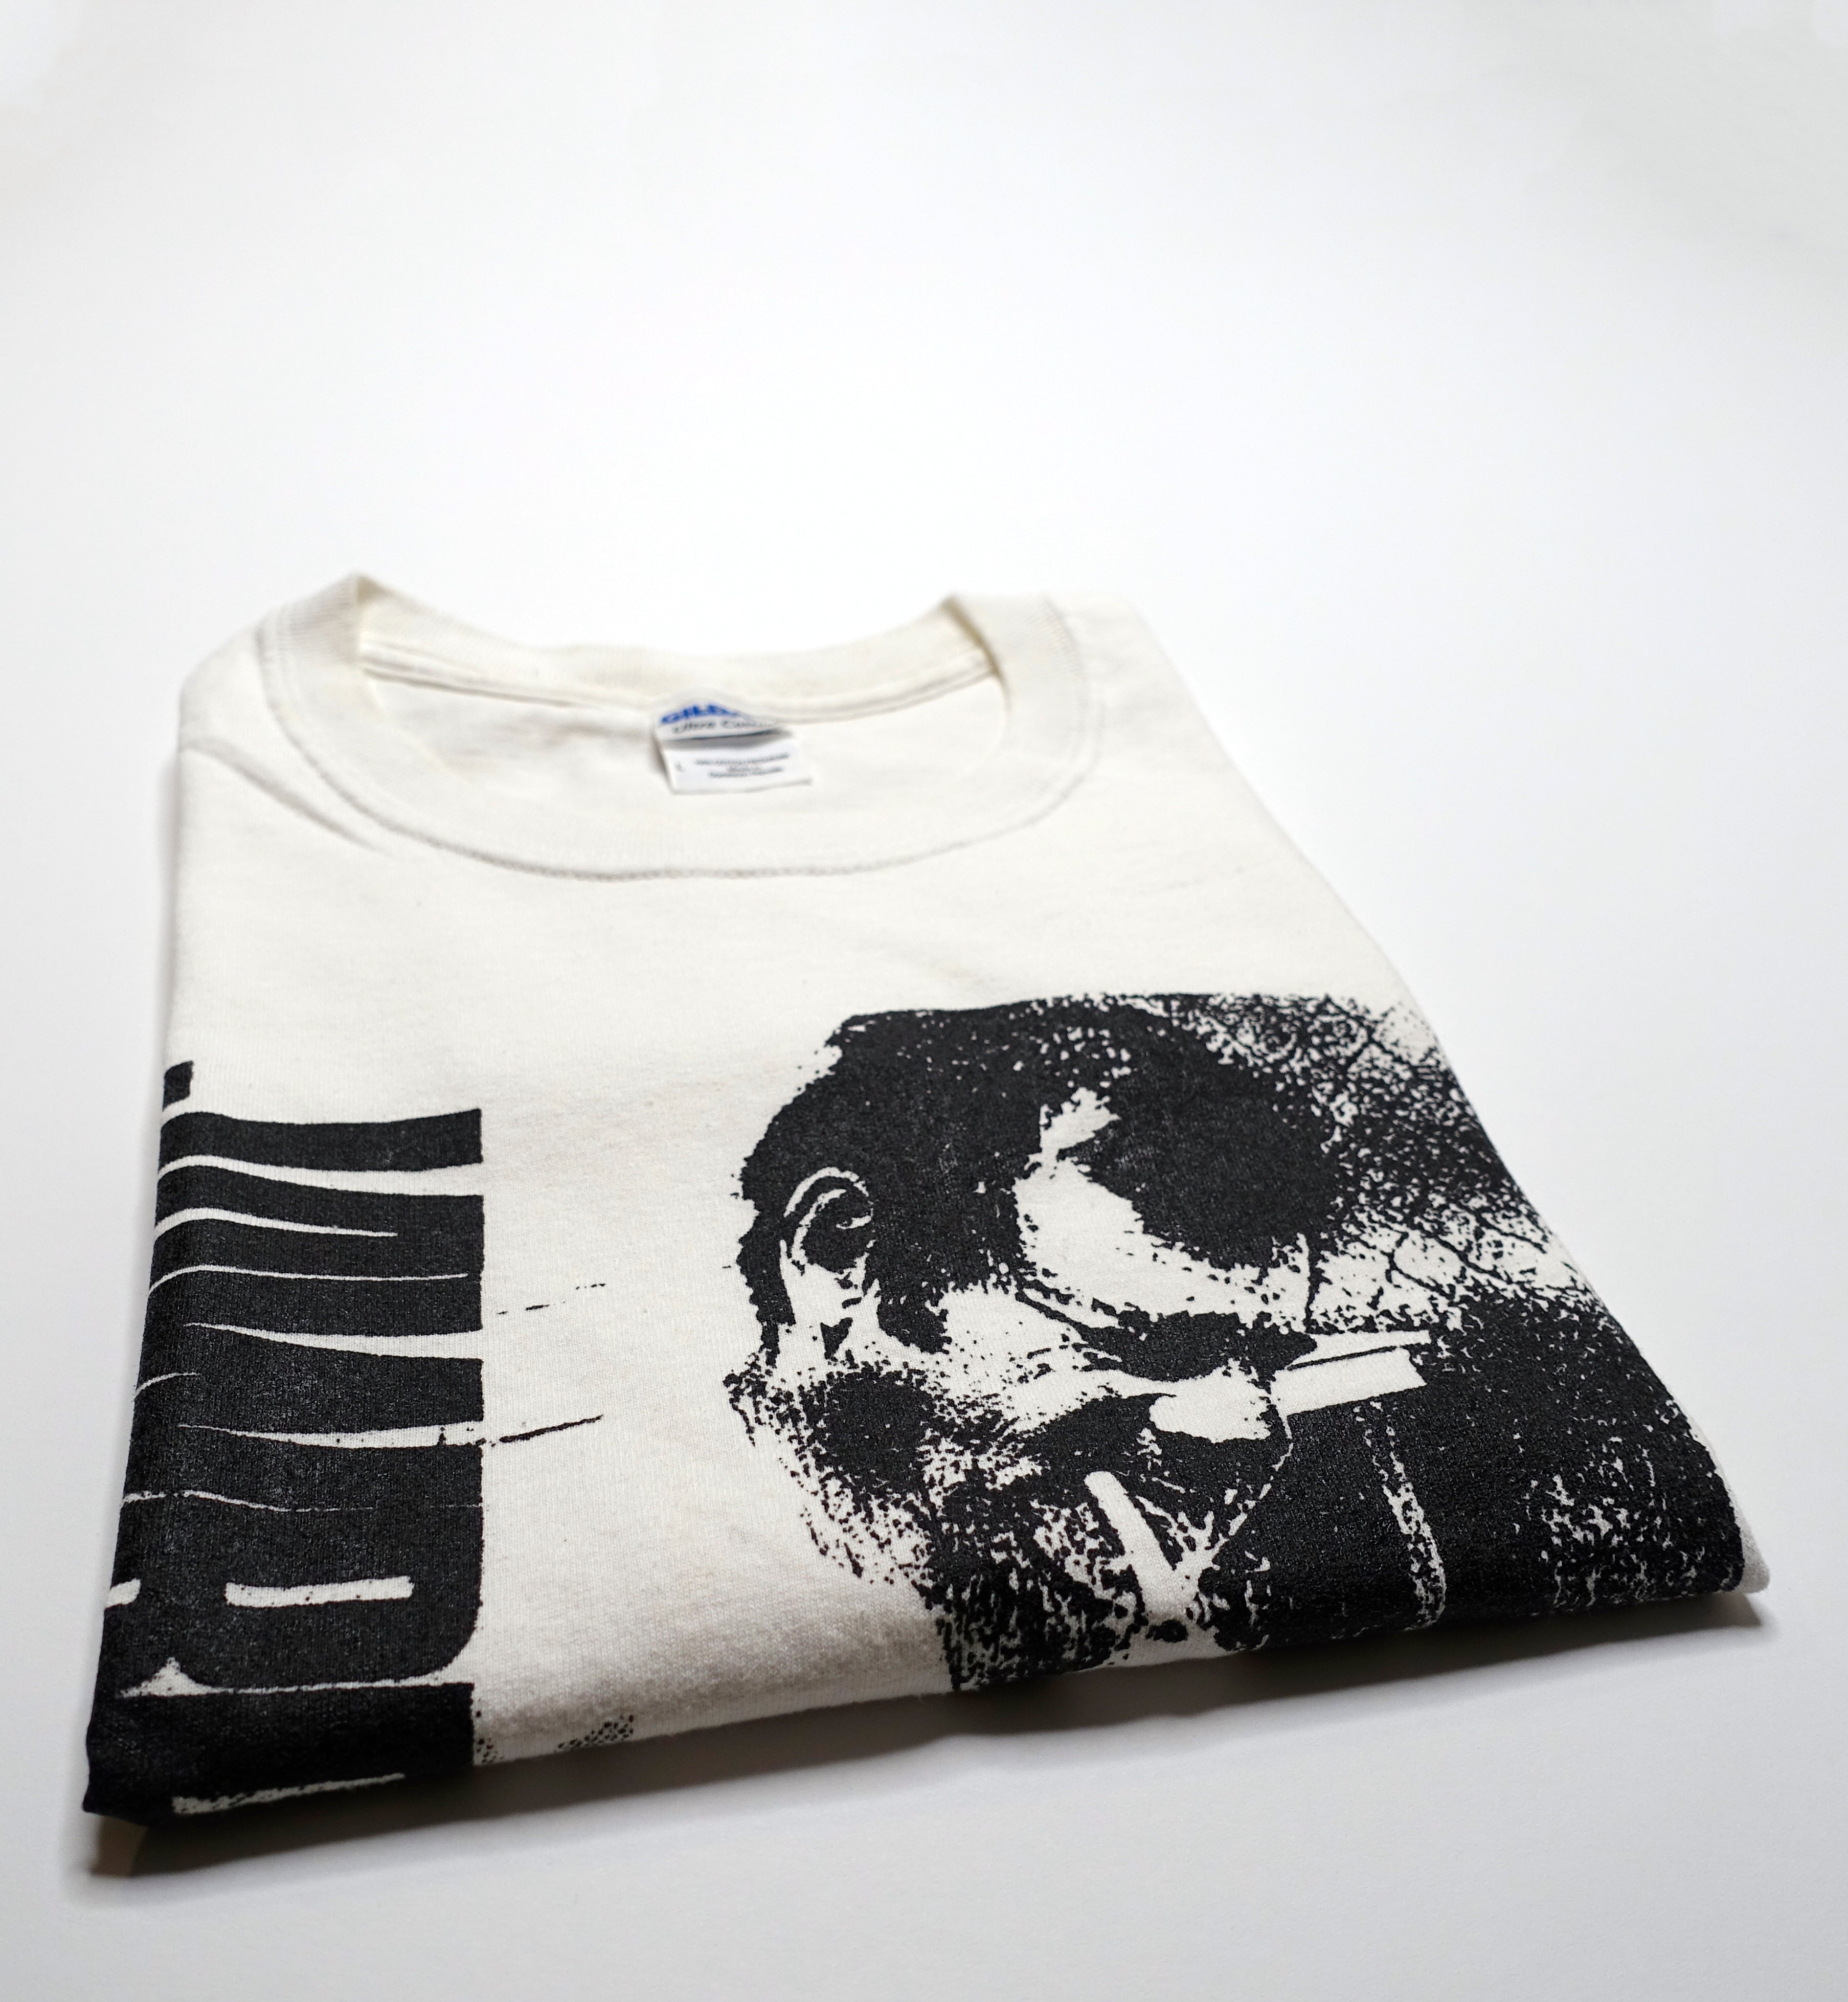 Jawbreaker - Busy (Bootleg) Shirt Size Large